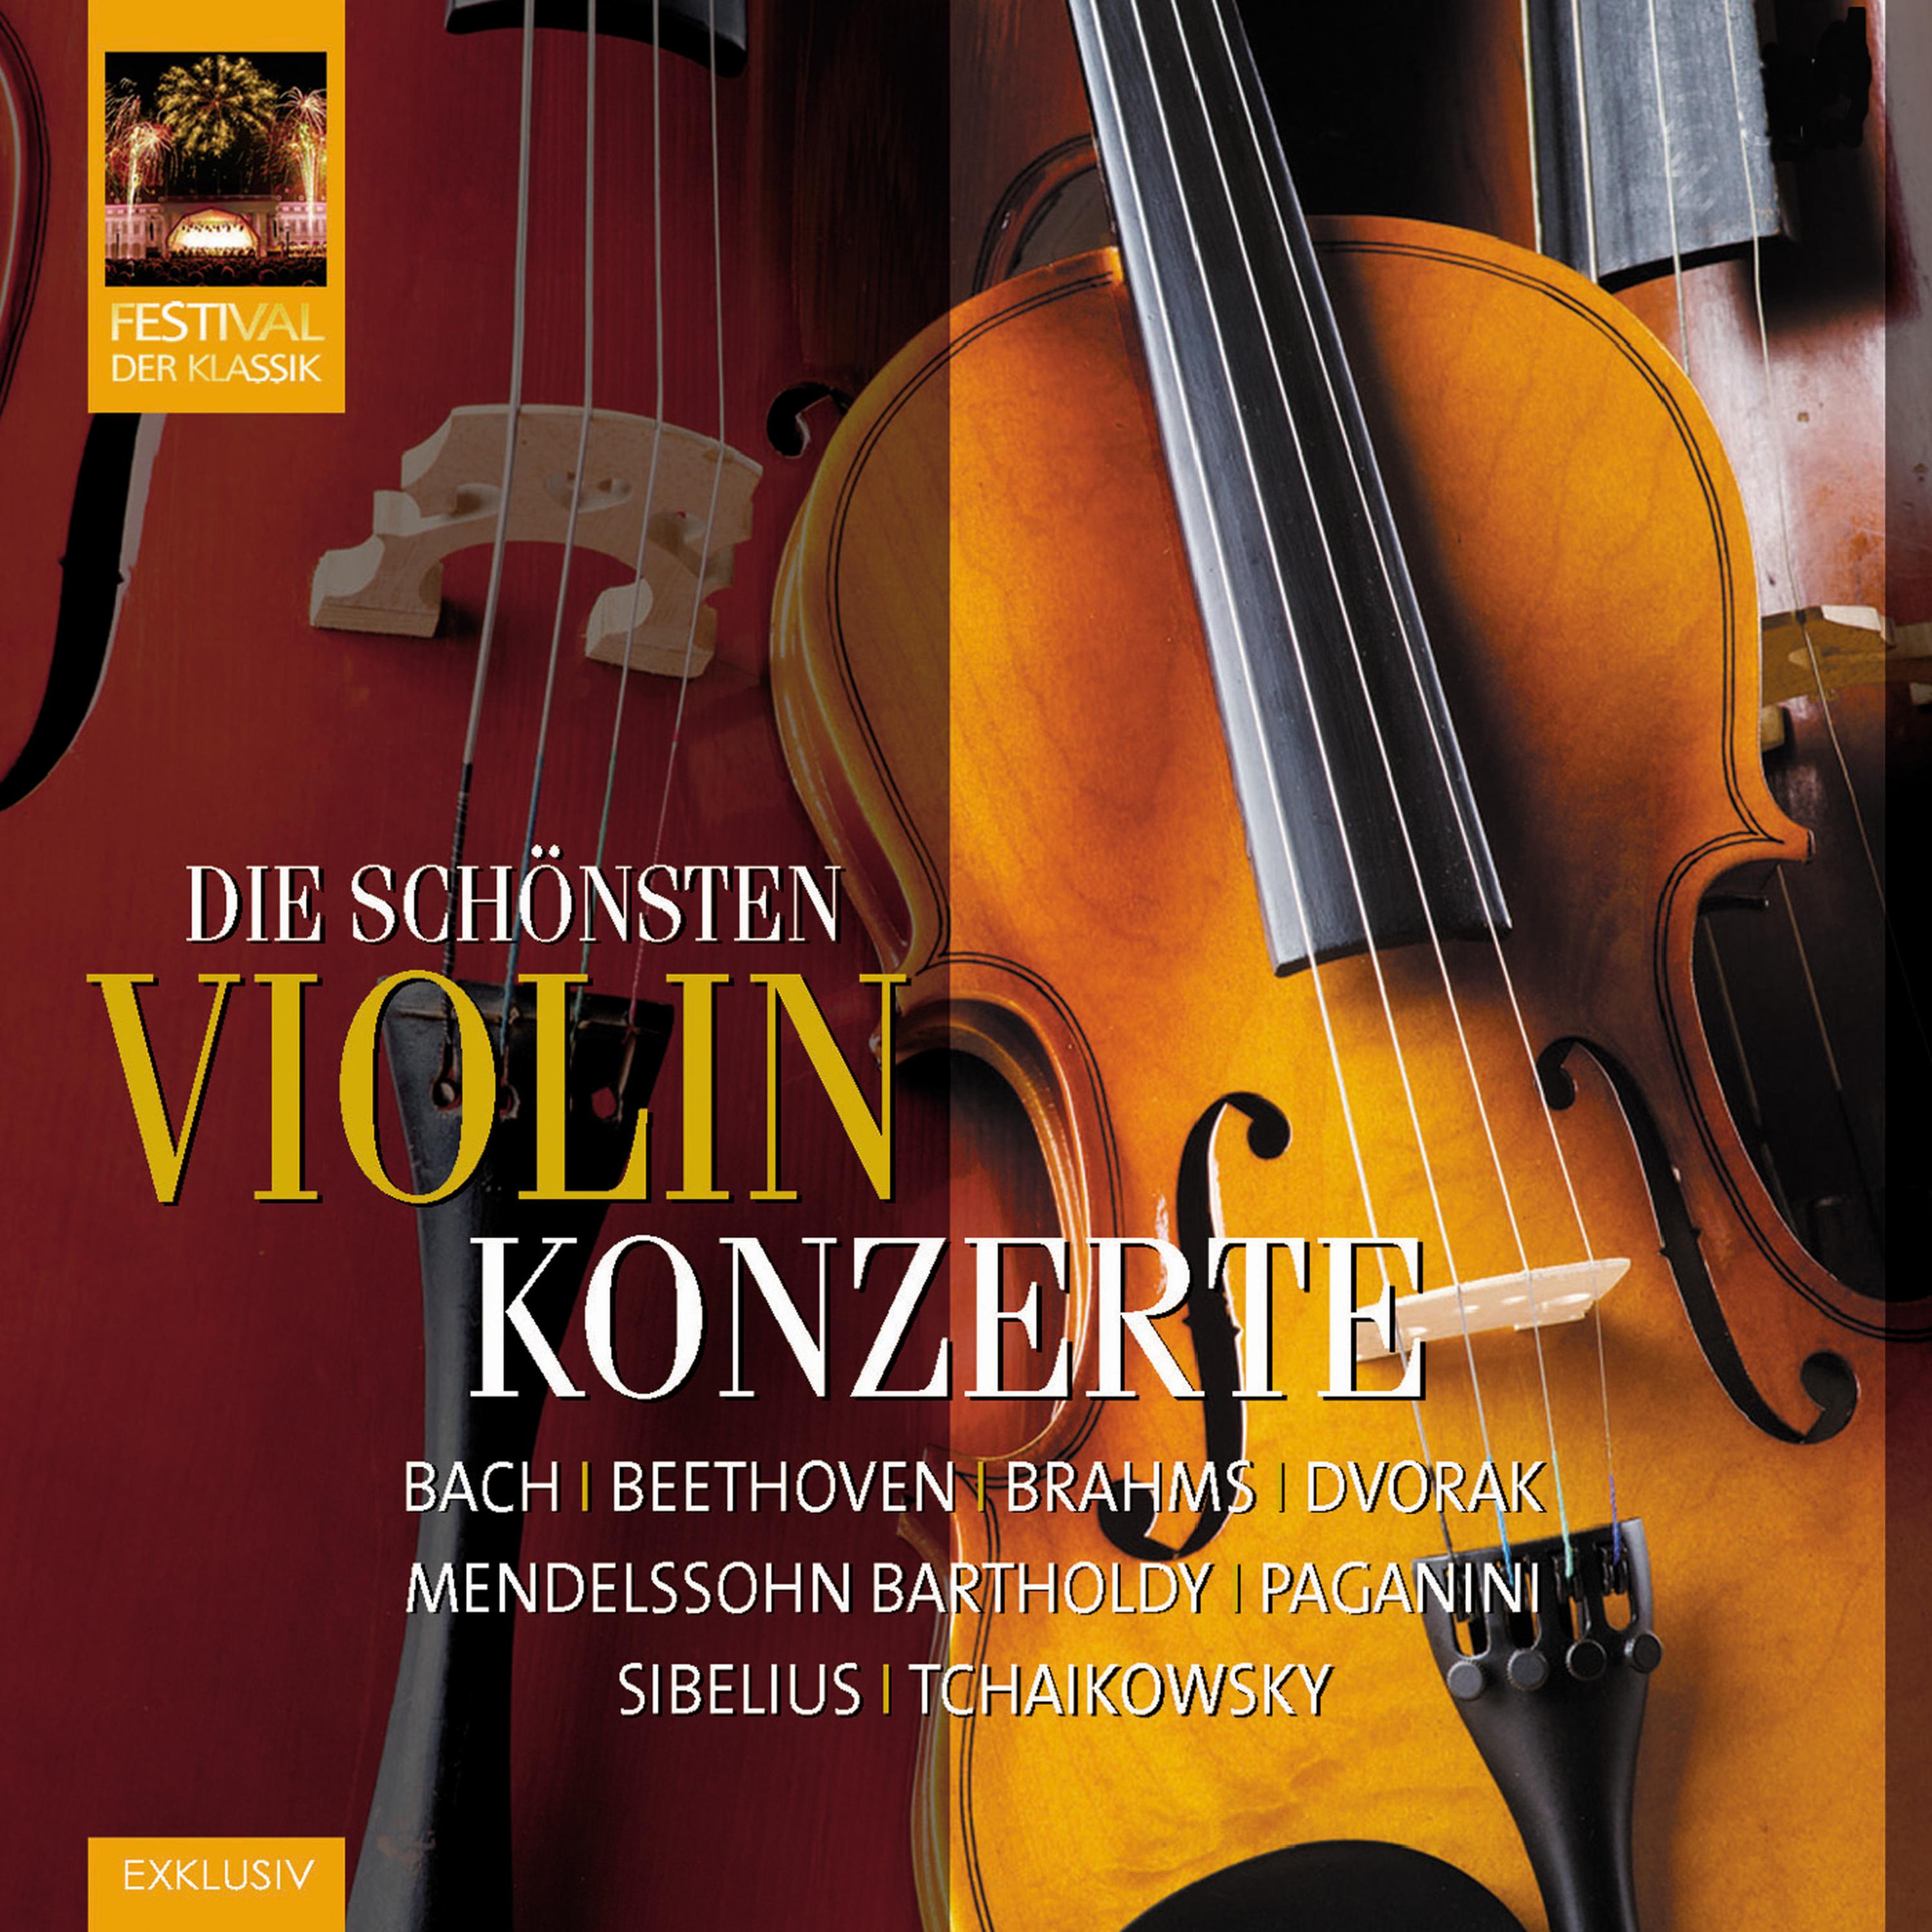 Violinromanze No. 2 für Violine und Orchester in F Major, Op. 50